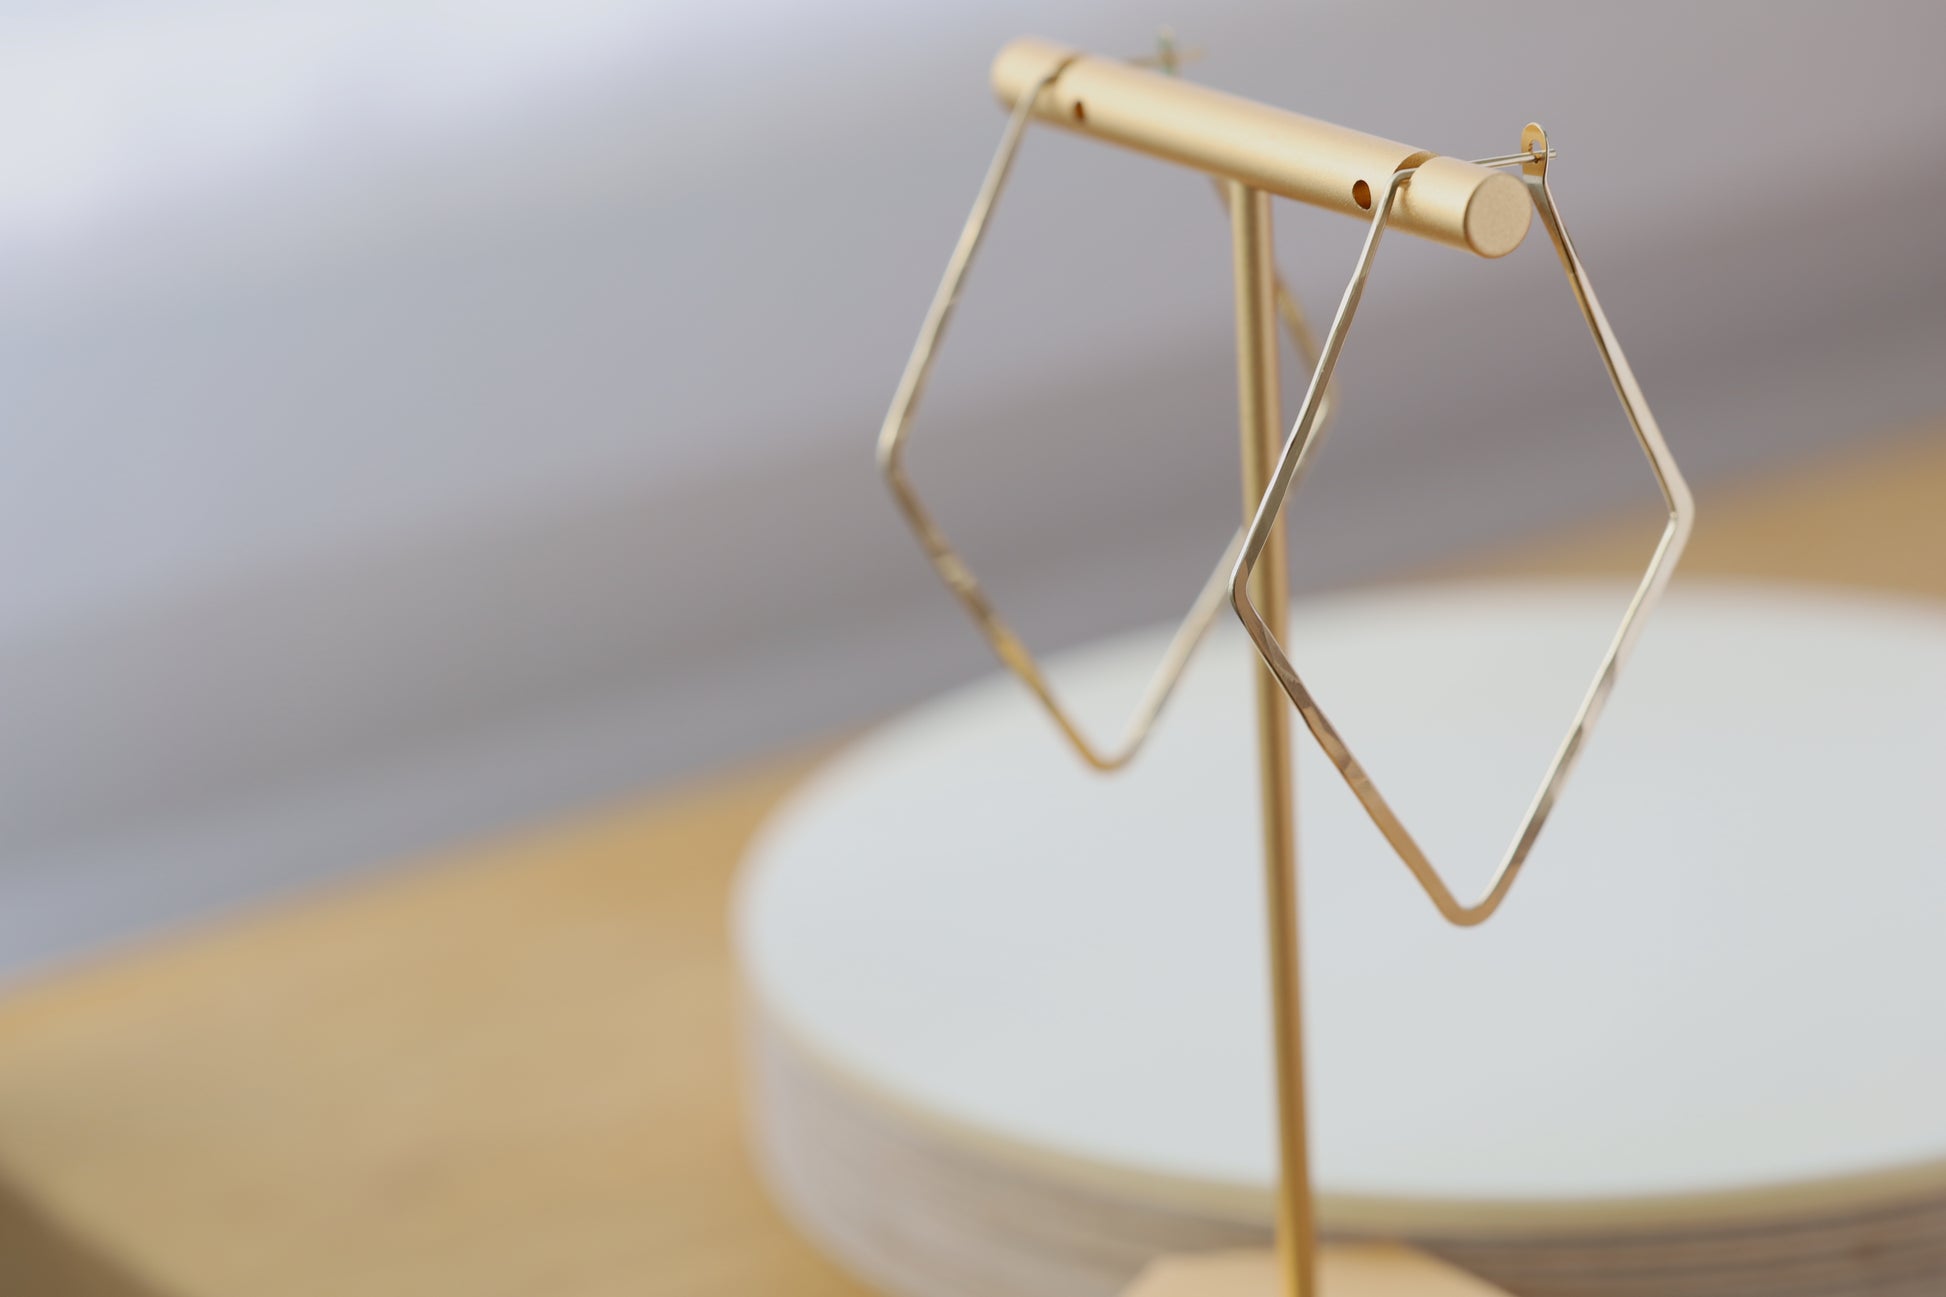 Diamond shaped hoop earrings in gold, hanging from an earring display.